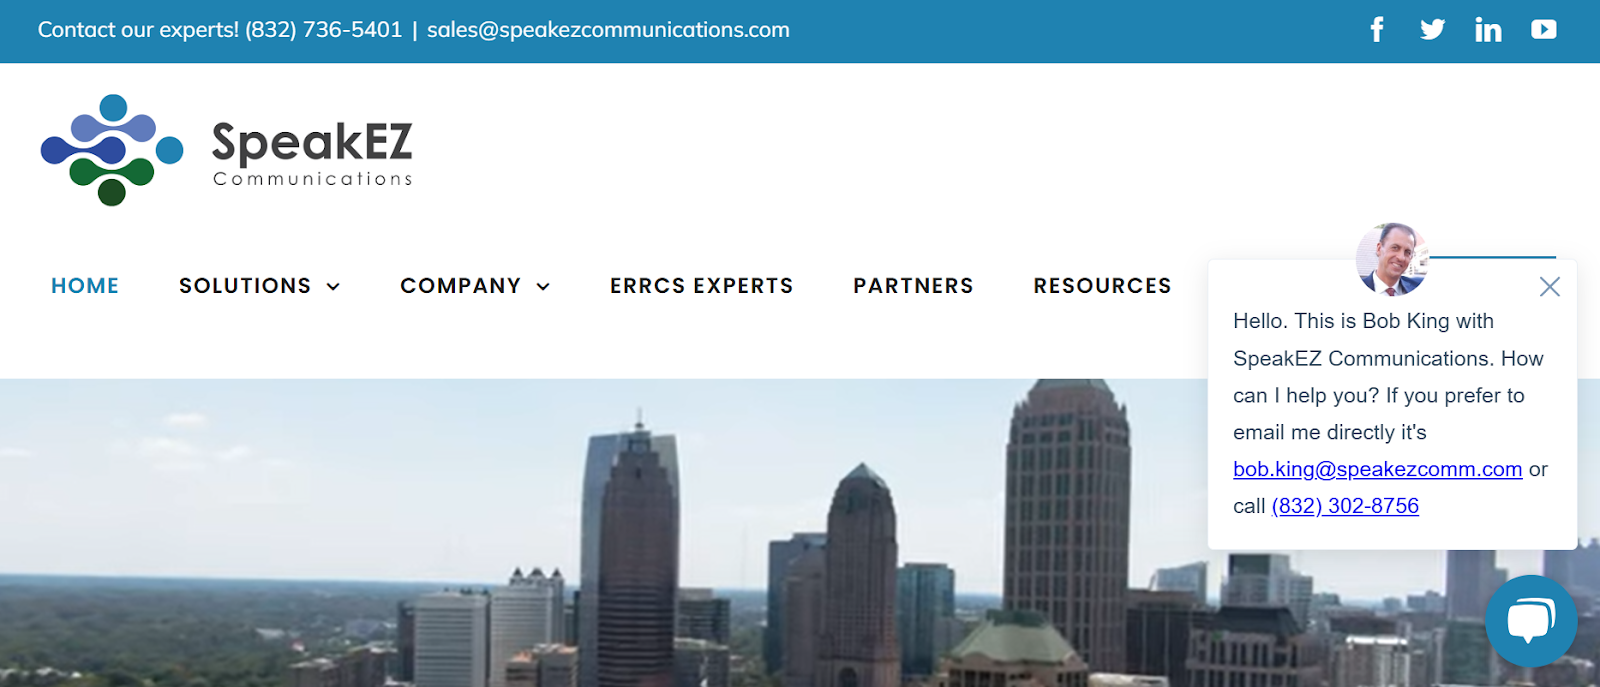 SpeakEZ website snapshot highlighting the services it offers.